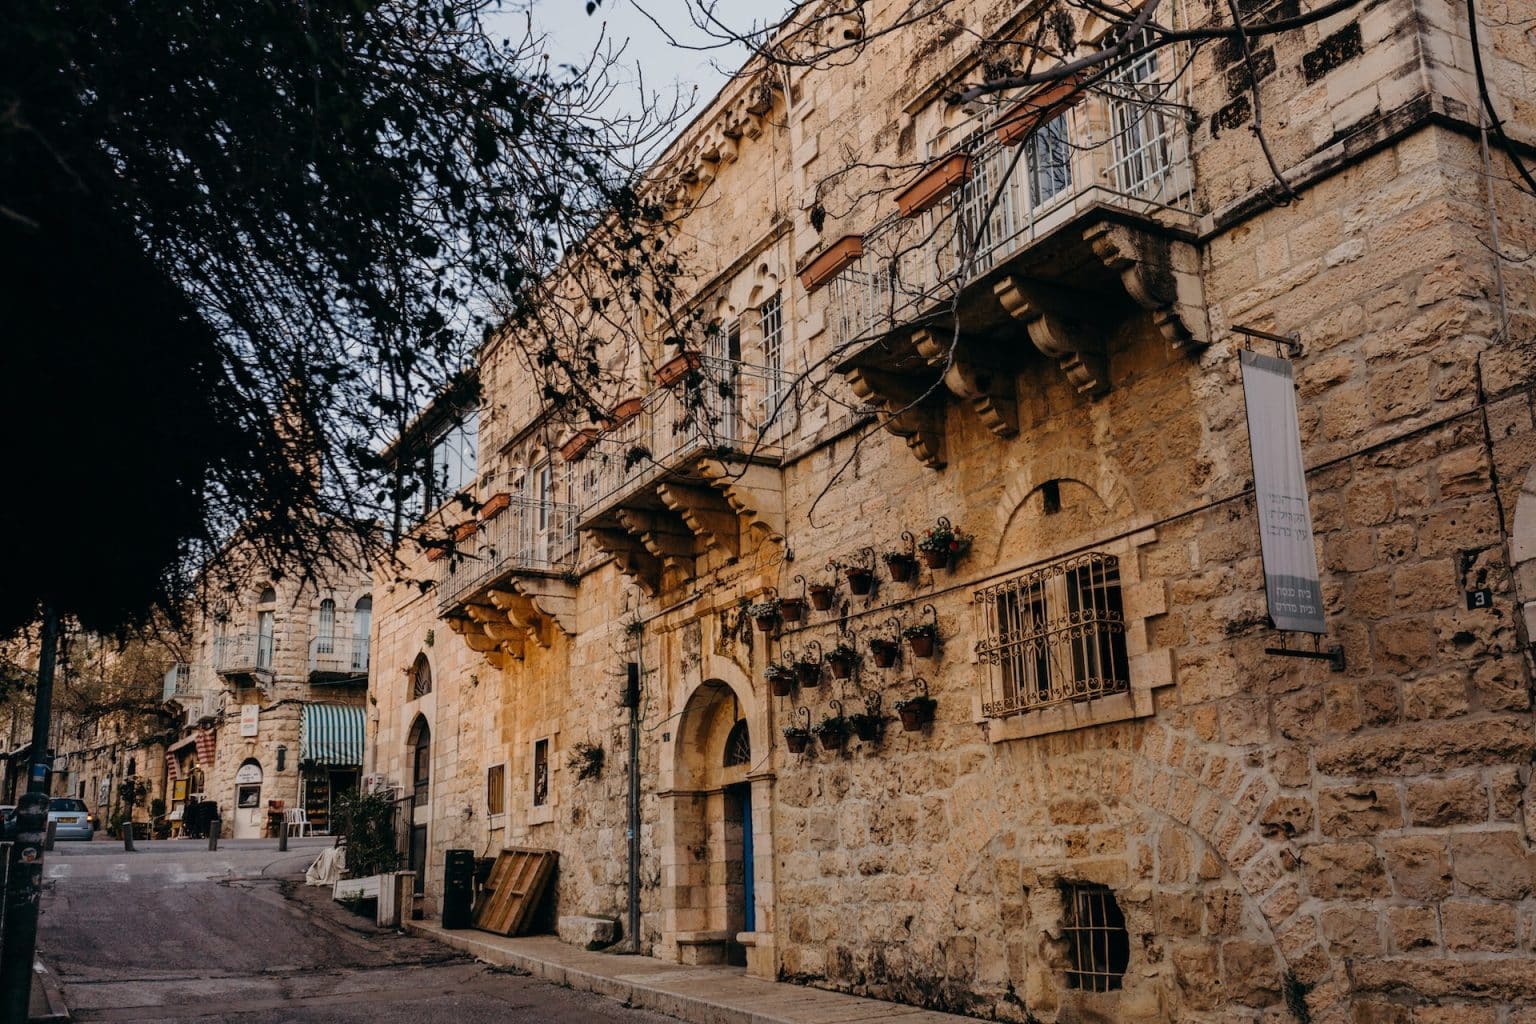 A house in Ein Karem, Jerusalem